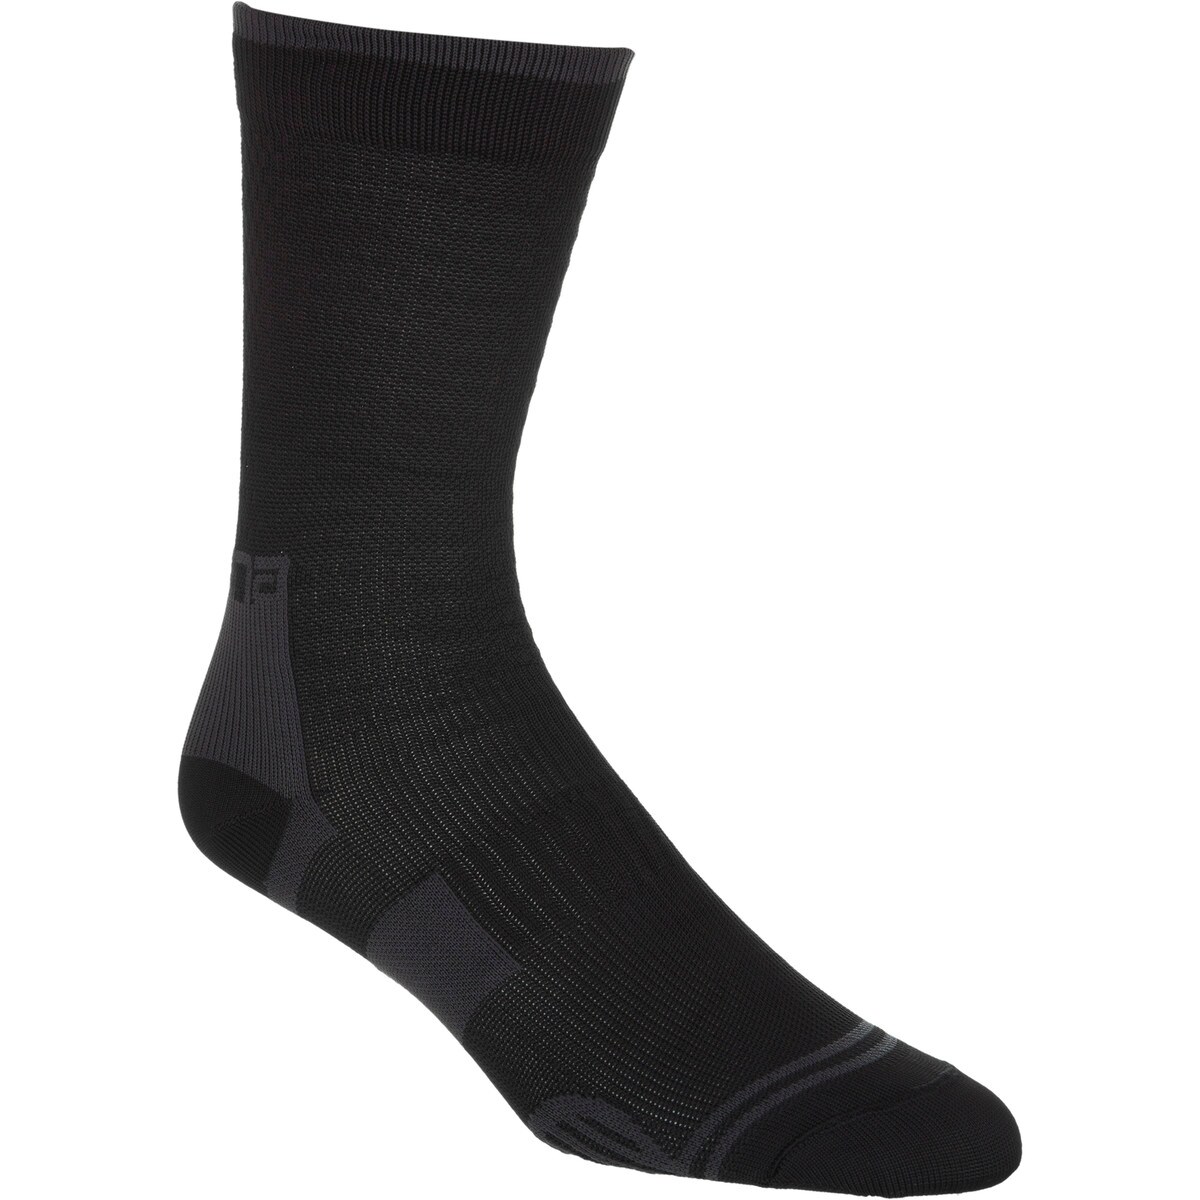 Giordana EXO Tall Cuff Compression Sock - Men's